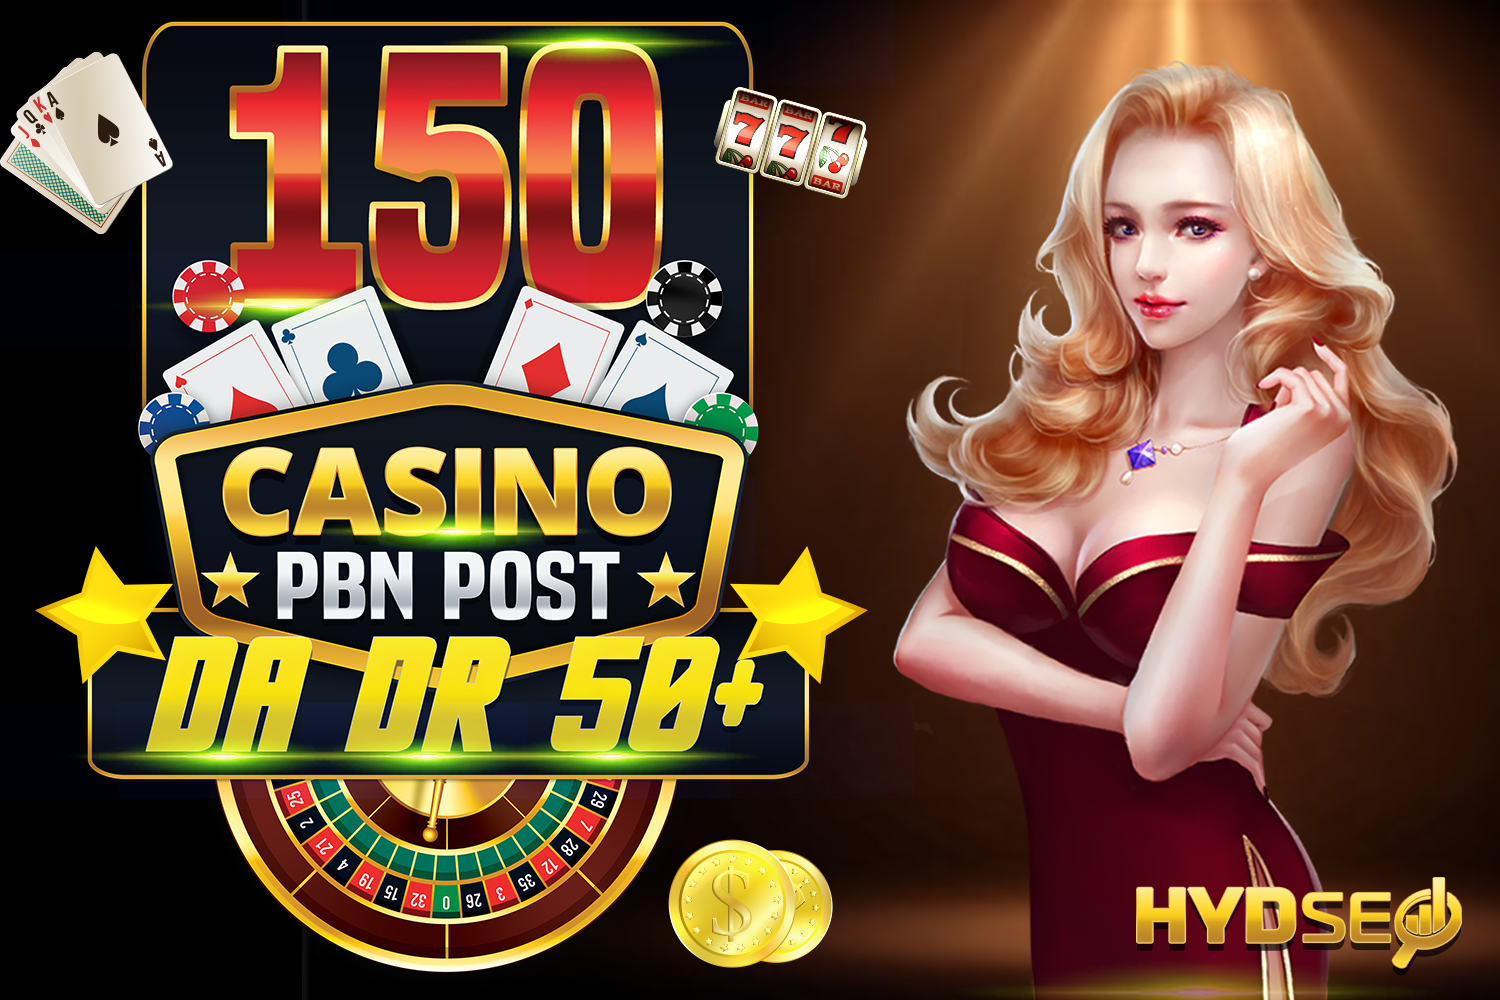 Black Friday Offer - DA50+ DR50+ 150 Unique Pbn - Casino Poker Judi Toggle - All Languages Accepted